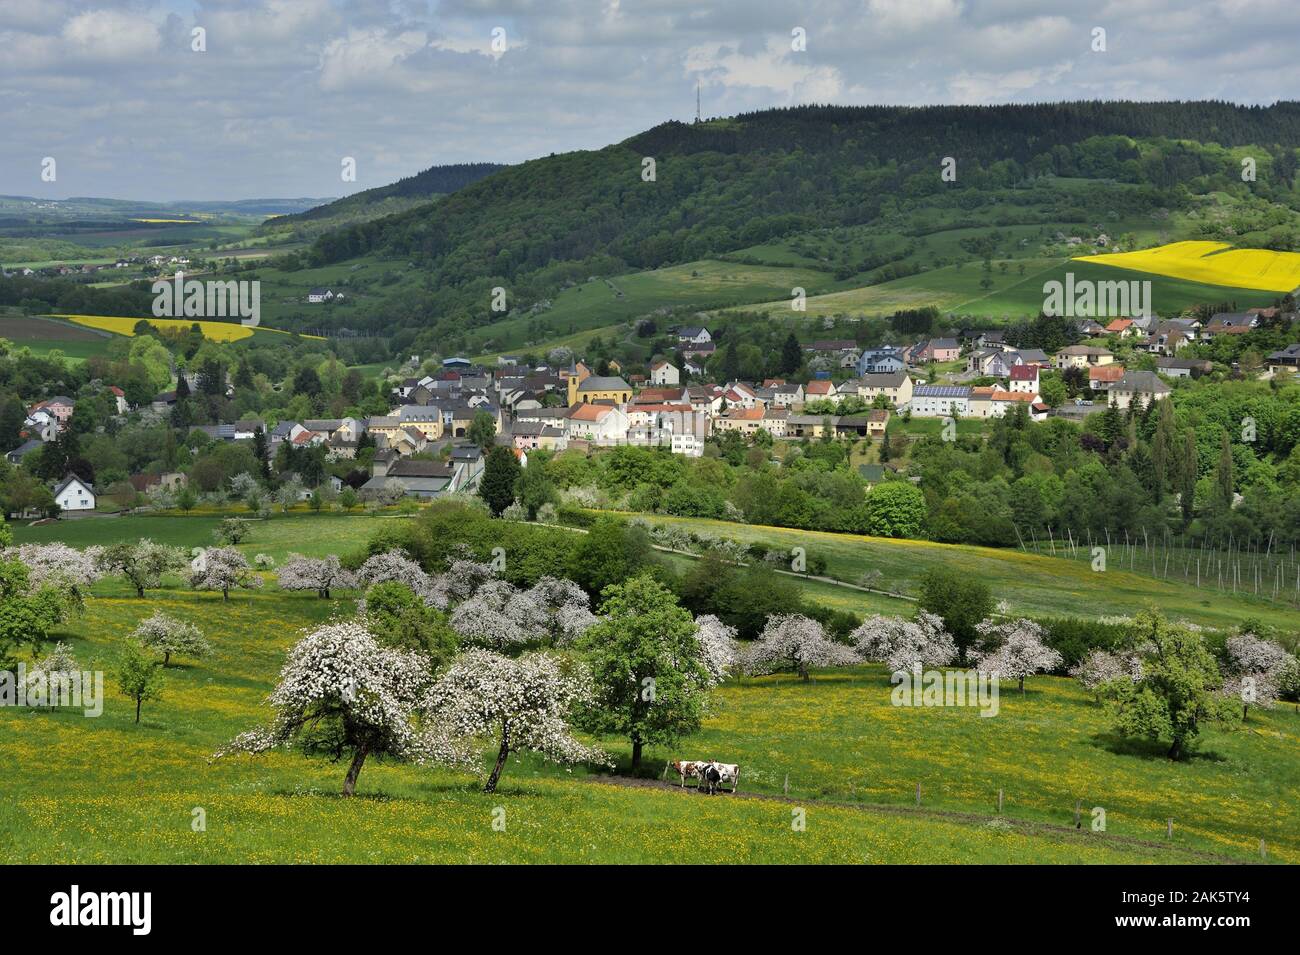 Avh : Blick auf Streuobstwiesen rund um den Ort, Eifel | conditions dans le monde entier Banque D'Images